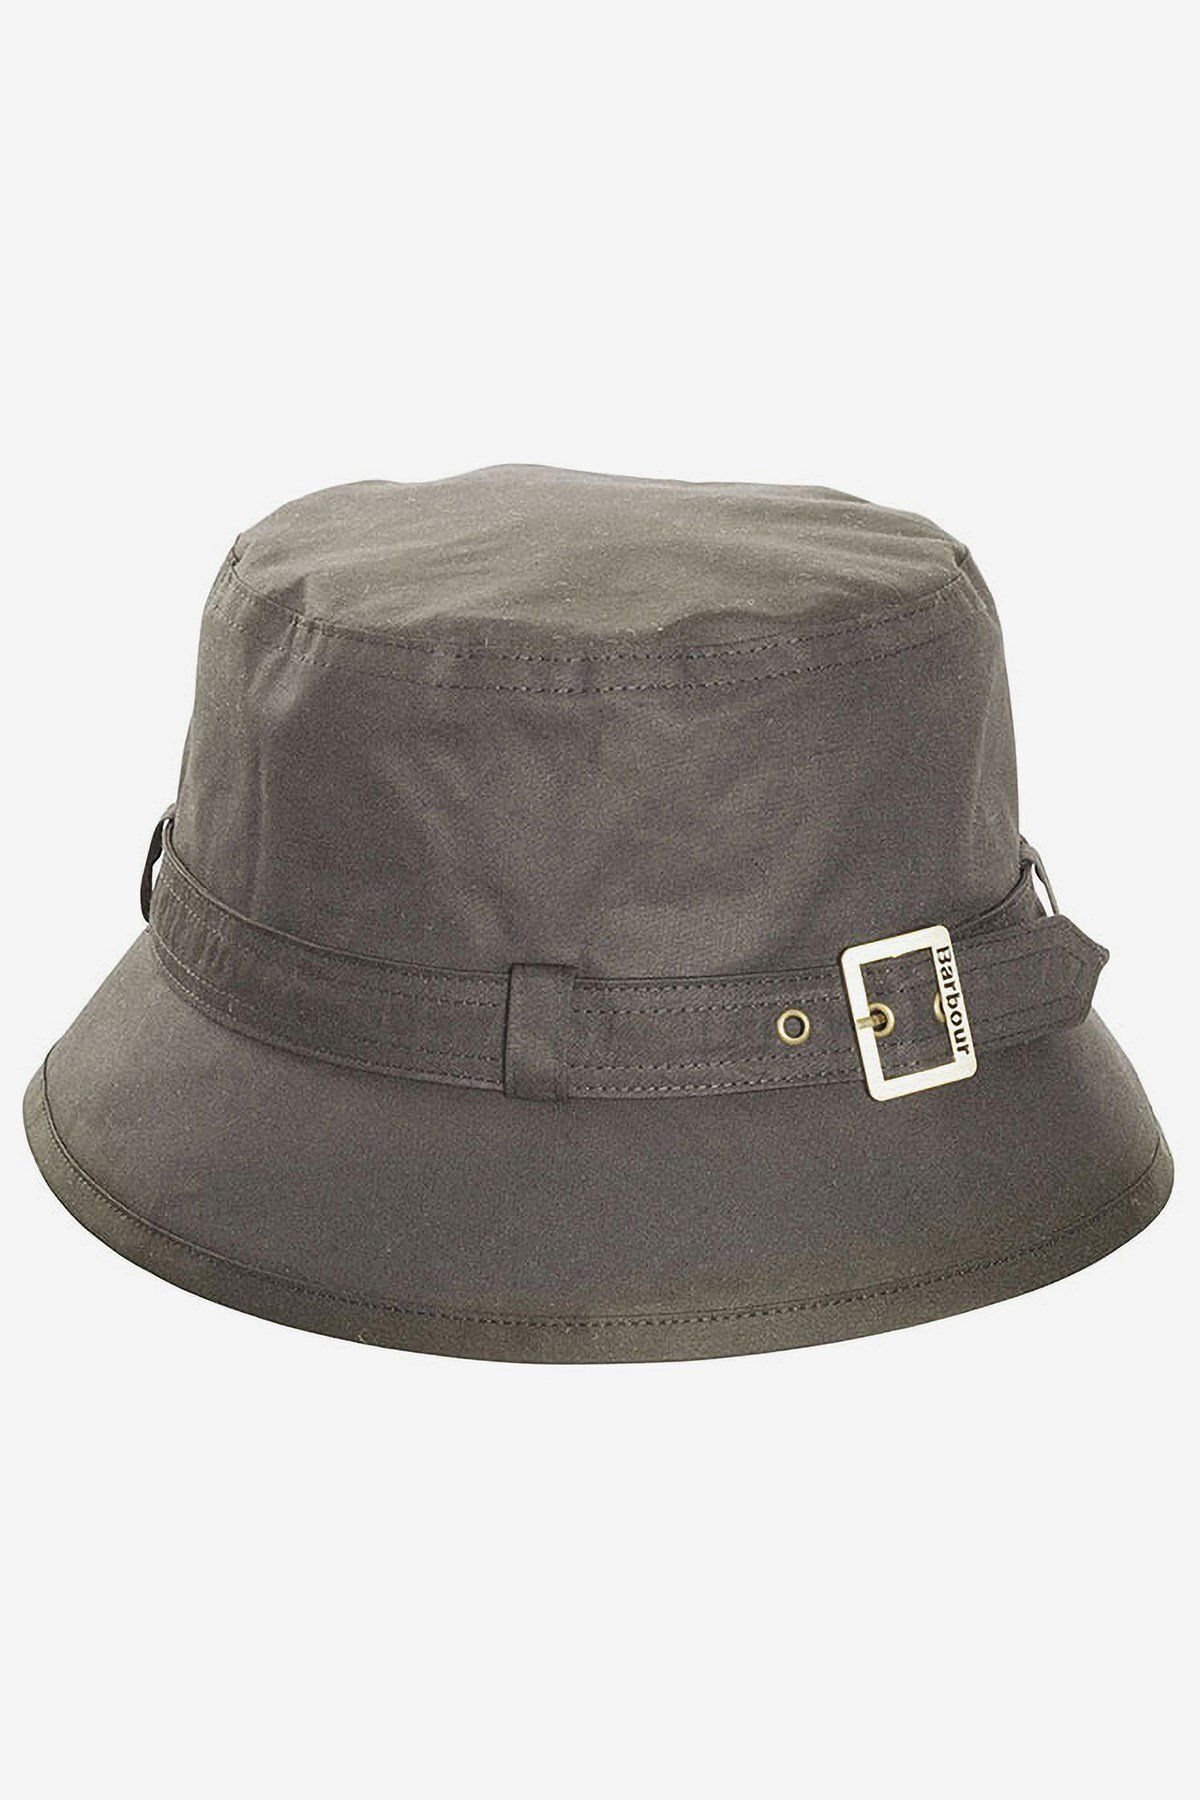 Barbour Kelso Wax Belted Hat Ol11 Olive